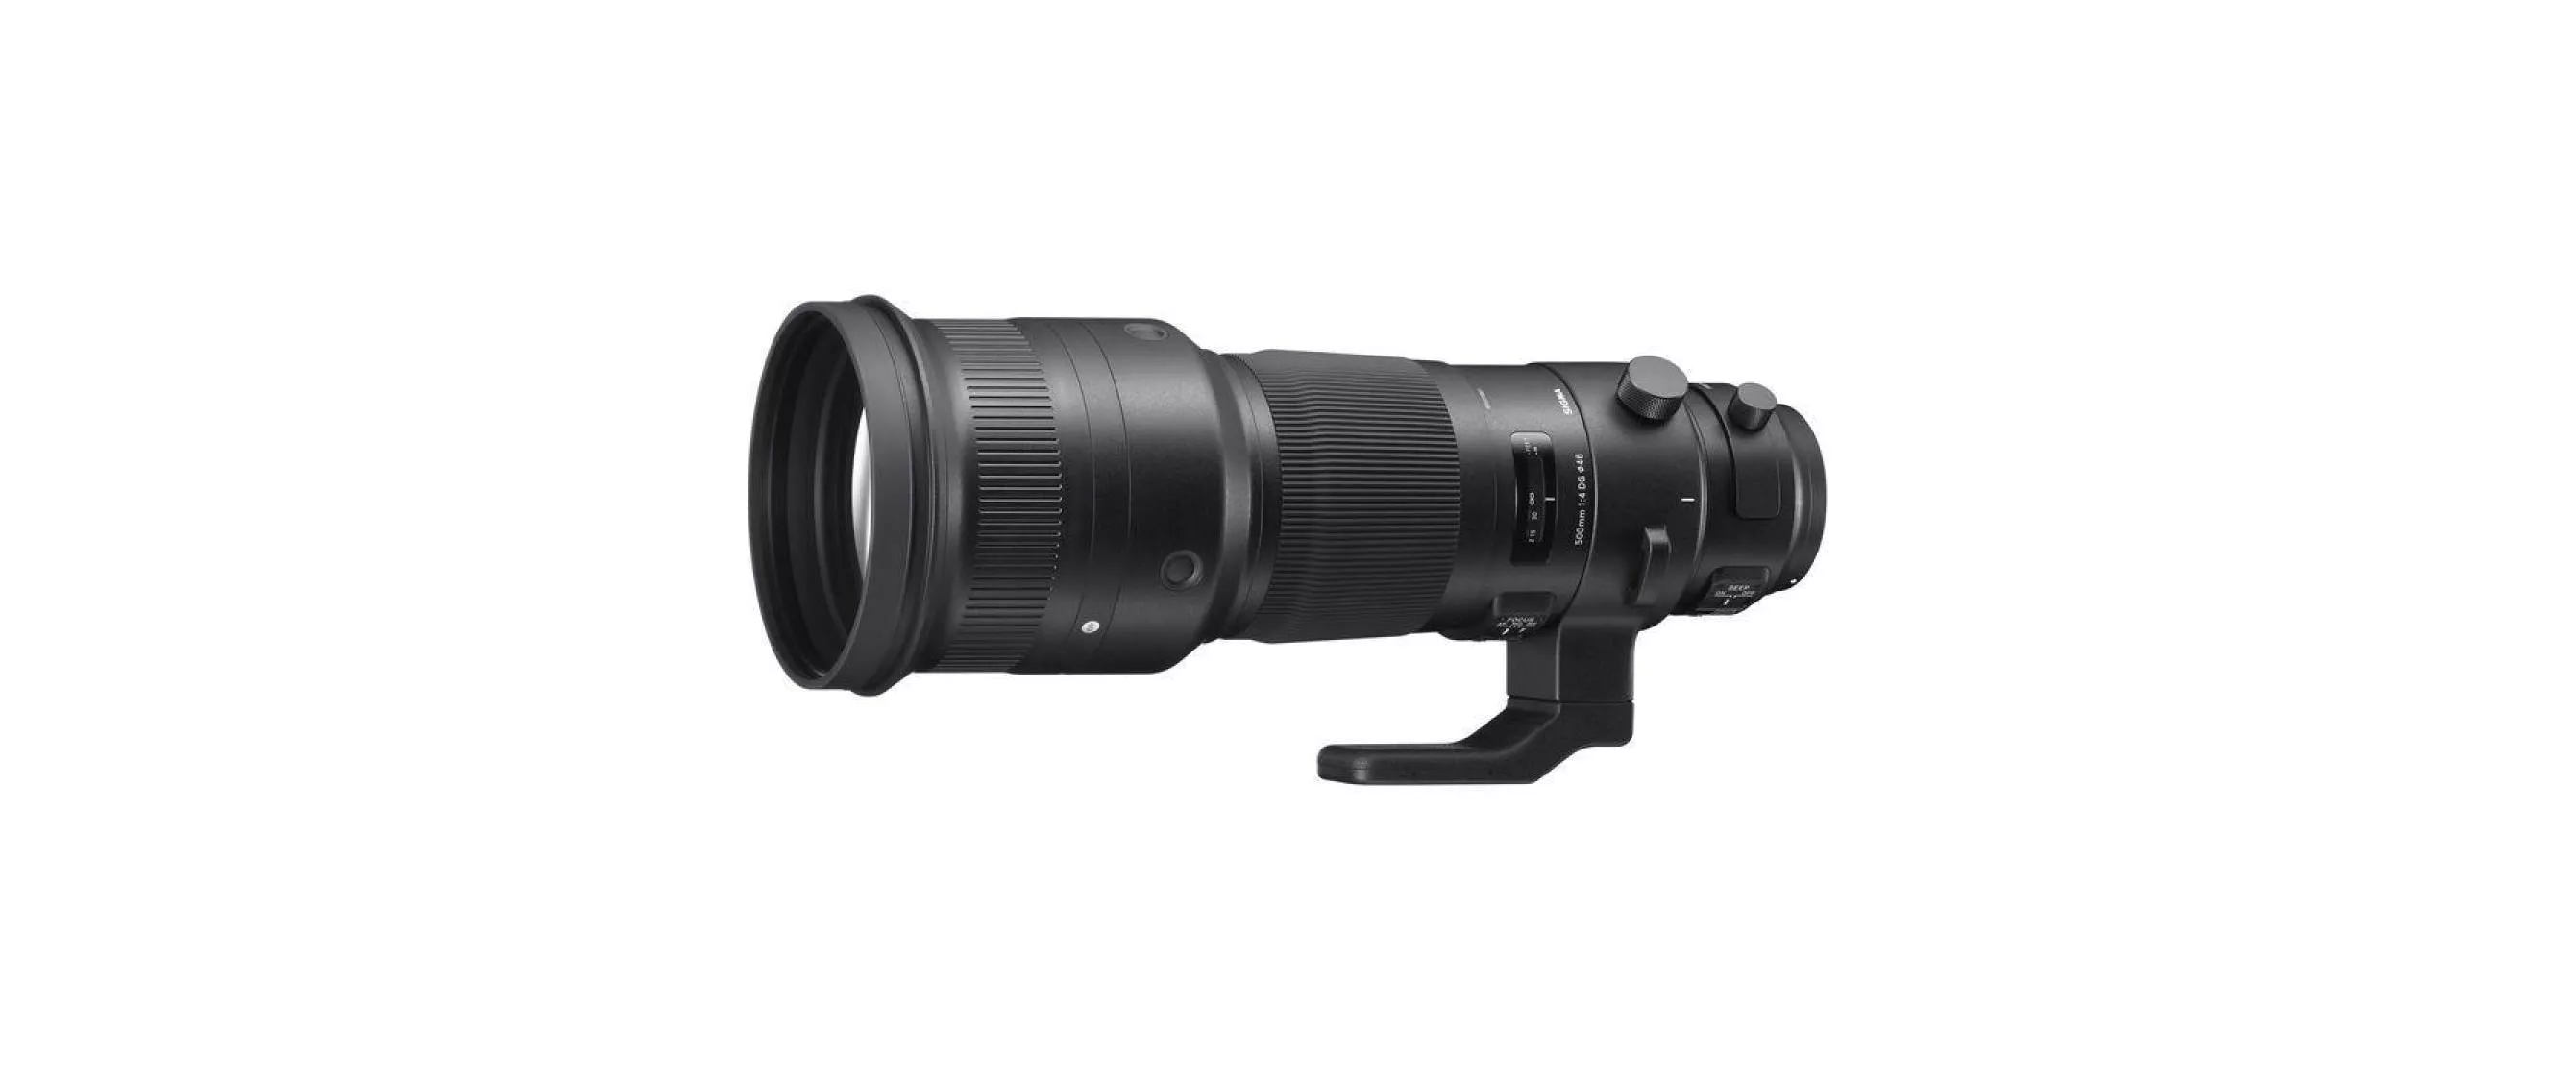 Longueur focale fixe 500mm F/4 DG HSM Sports \u2013 Nikon F